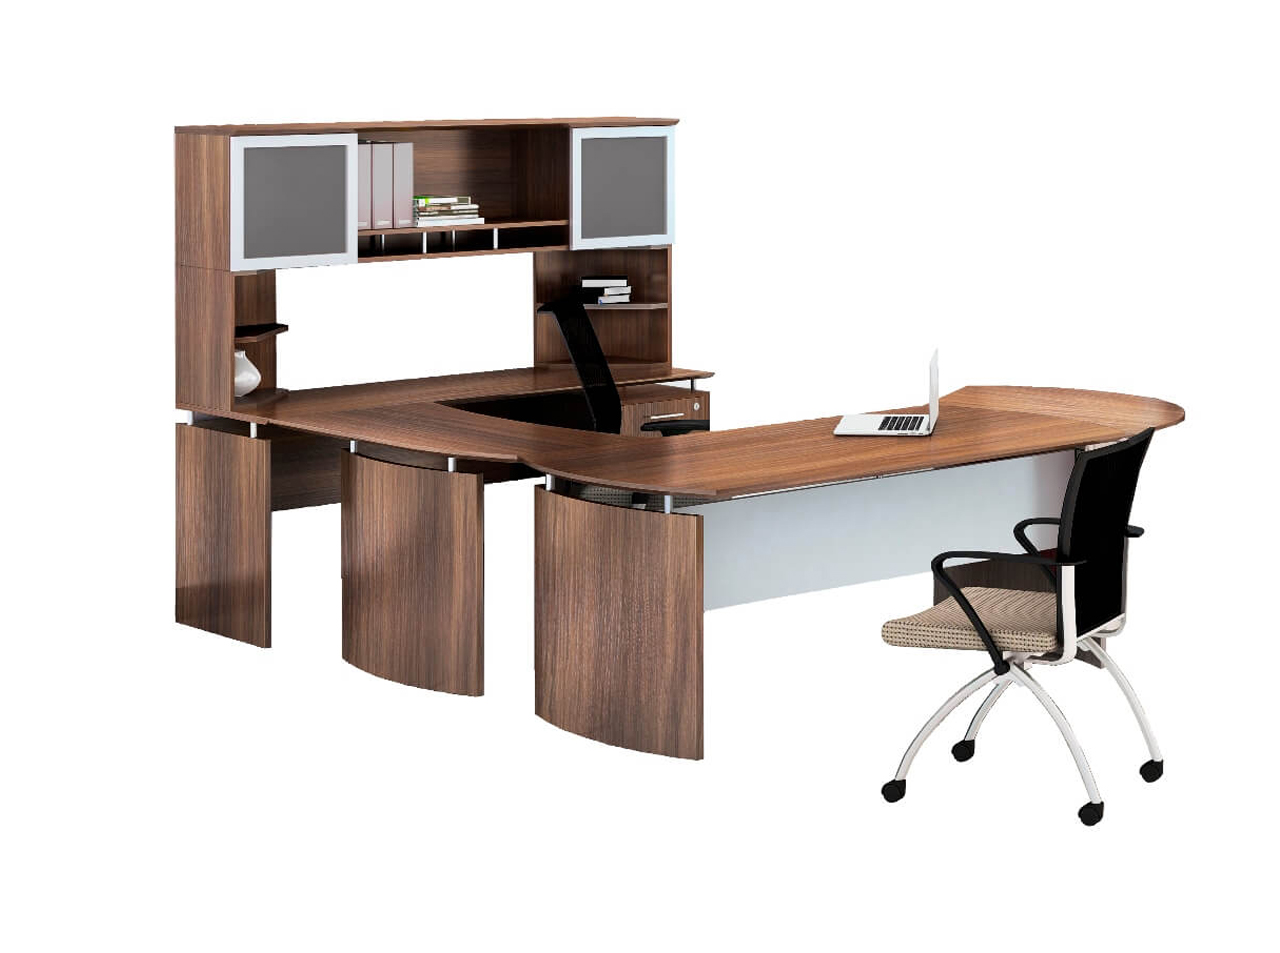 U shaped desk executive desk with hutch